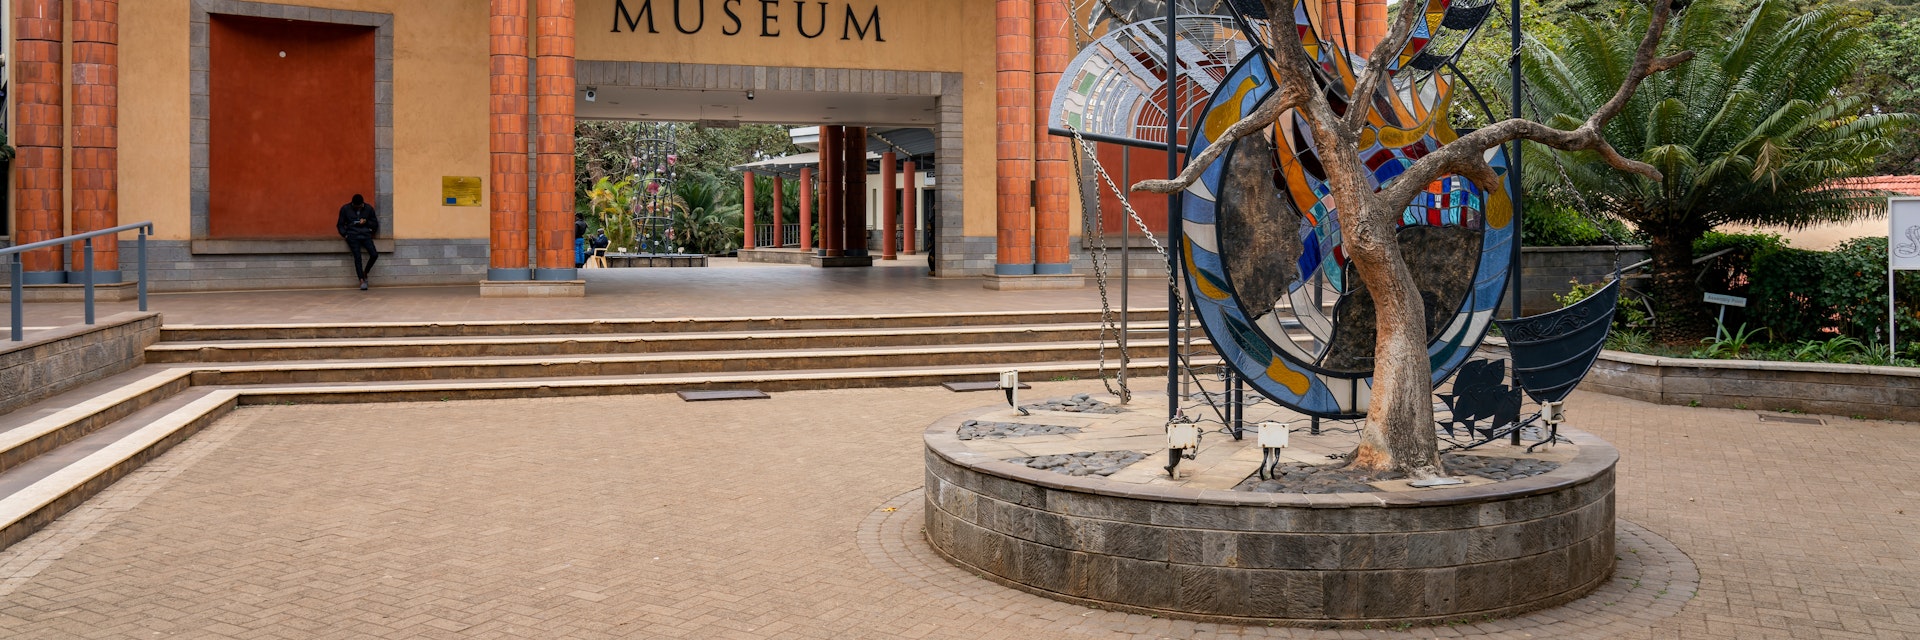 Entrance of Nairobi National Museum.